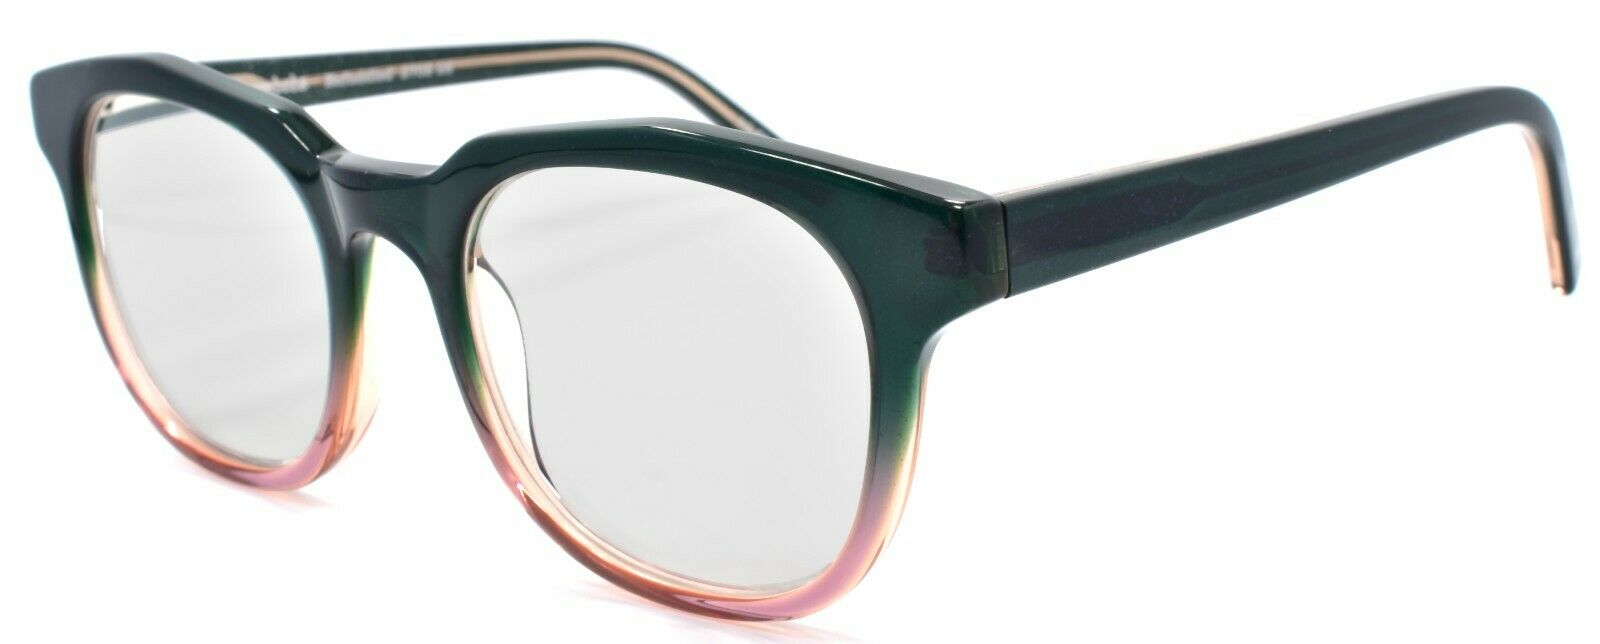 1-Eyebobs Befuddled 2702 26 Women's Reading Glasses Green / Purple +1.50-842754140942-IKSpecs